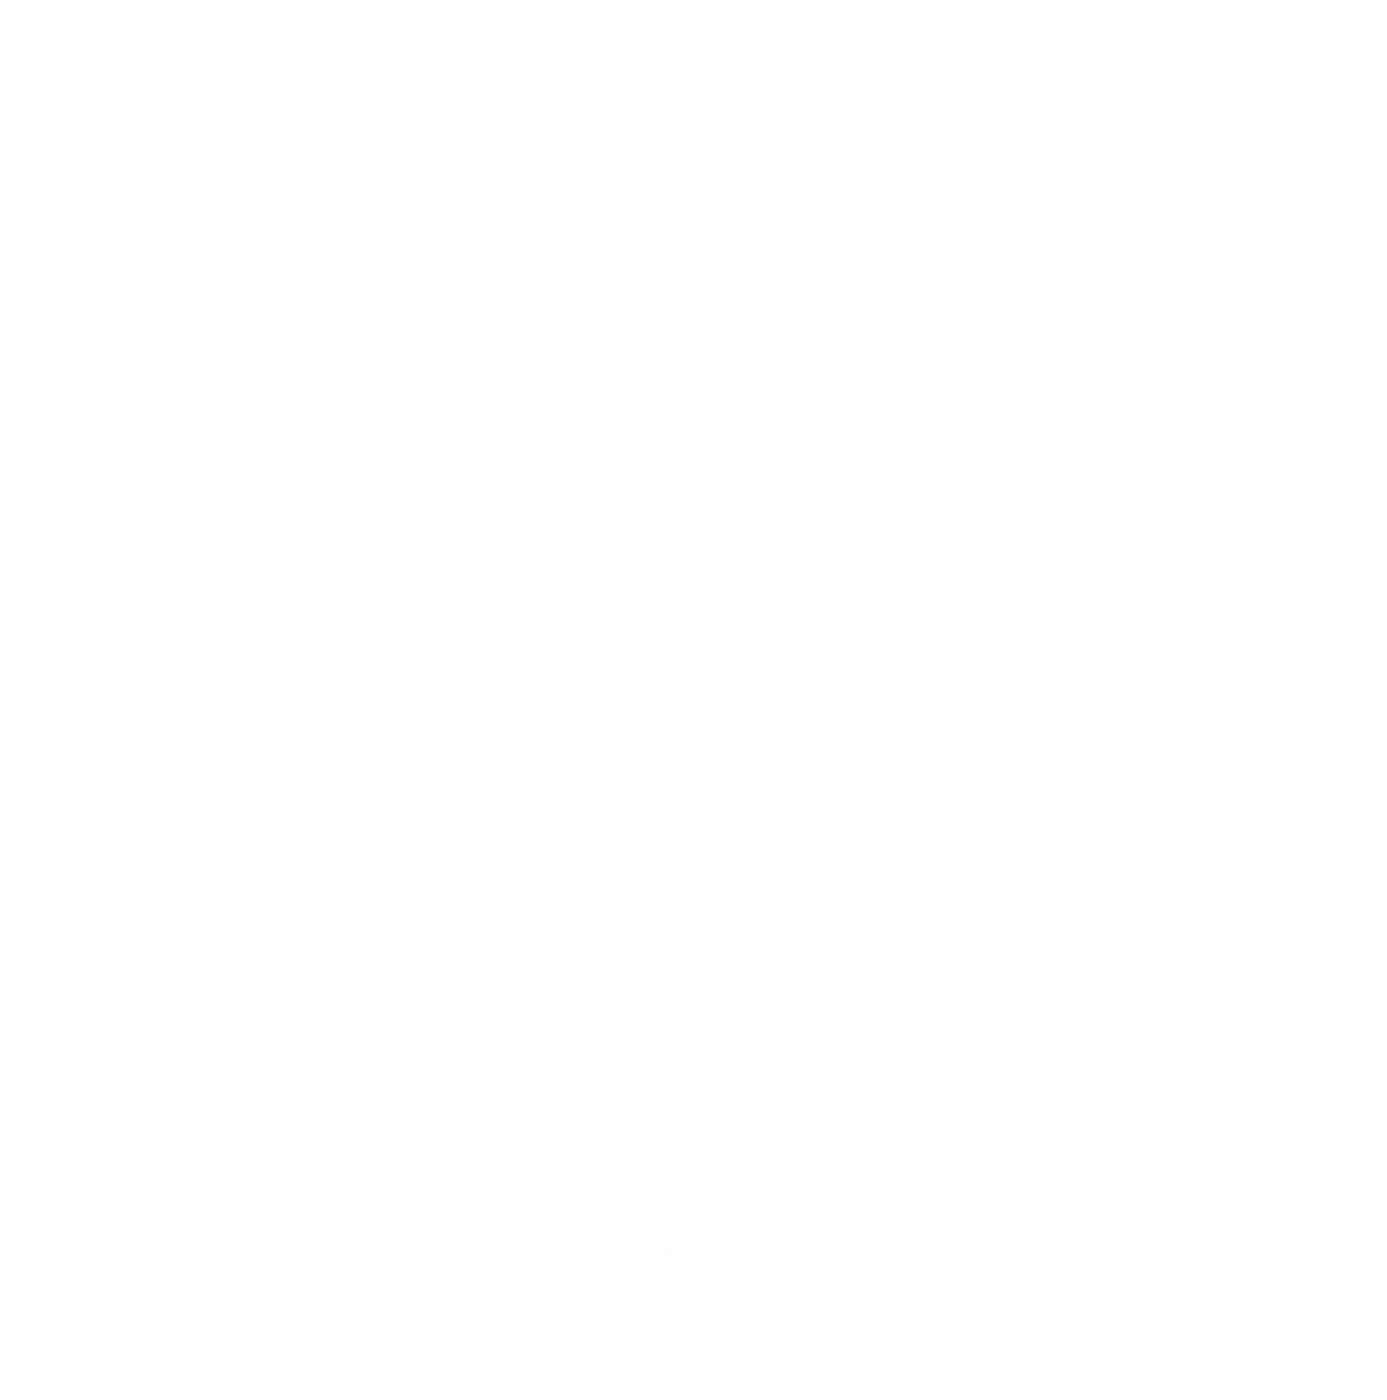 Rentalcars.com Award logo